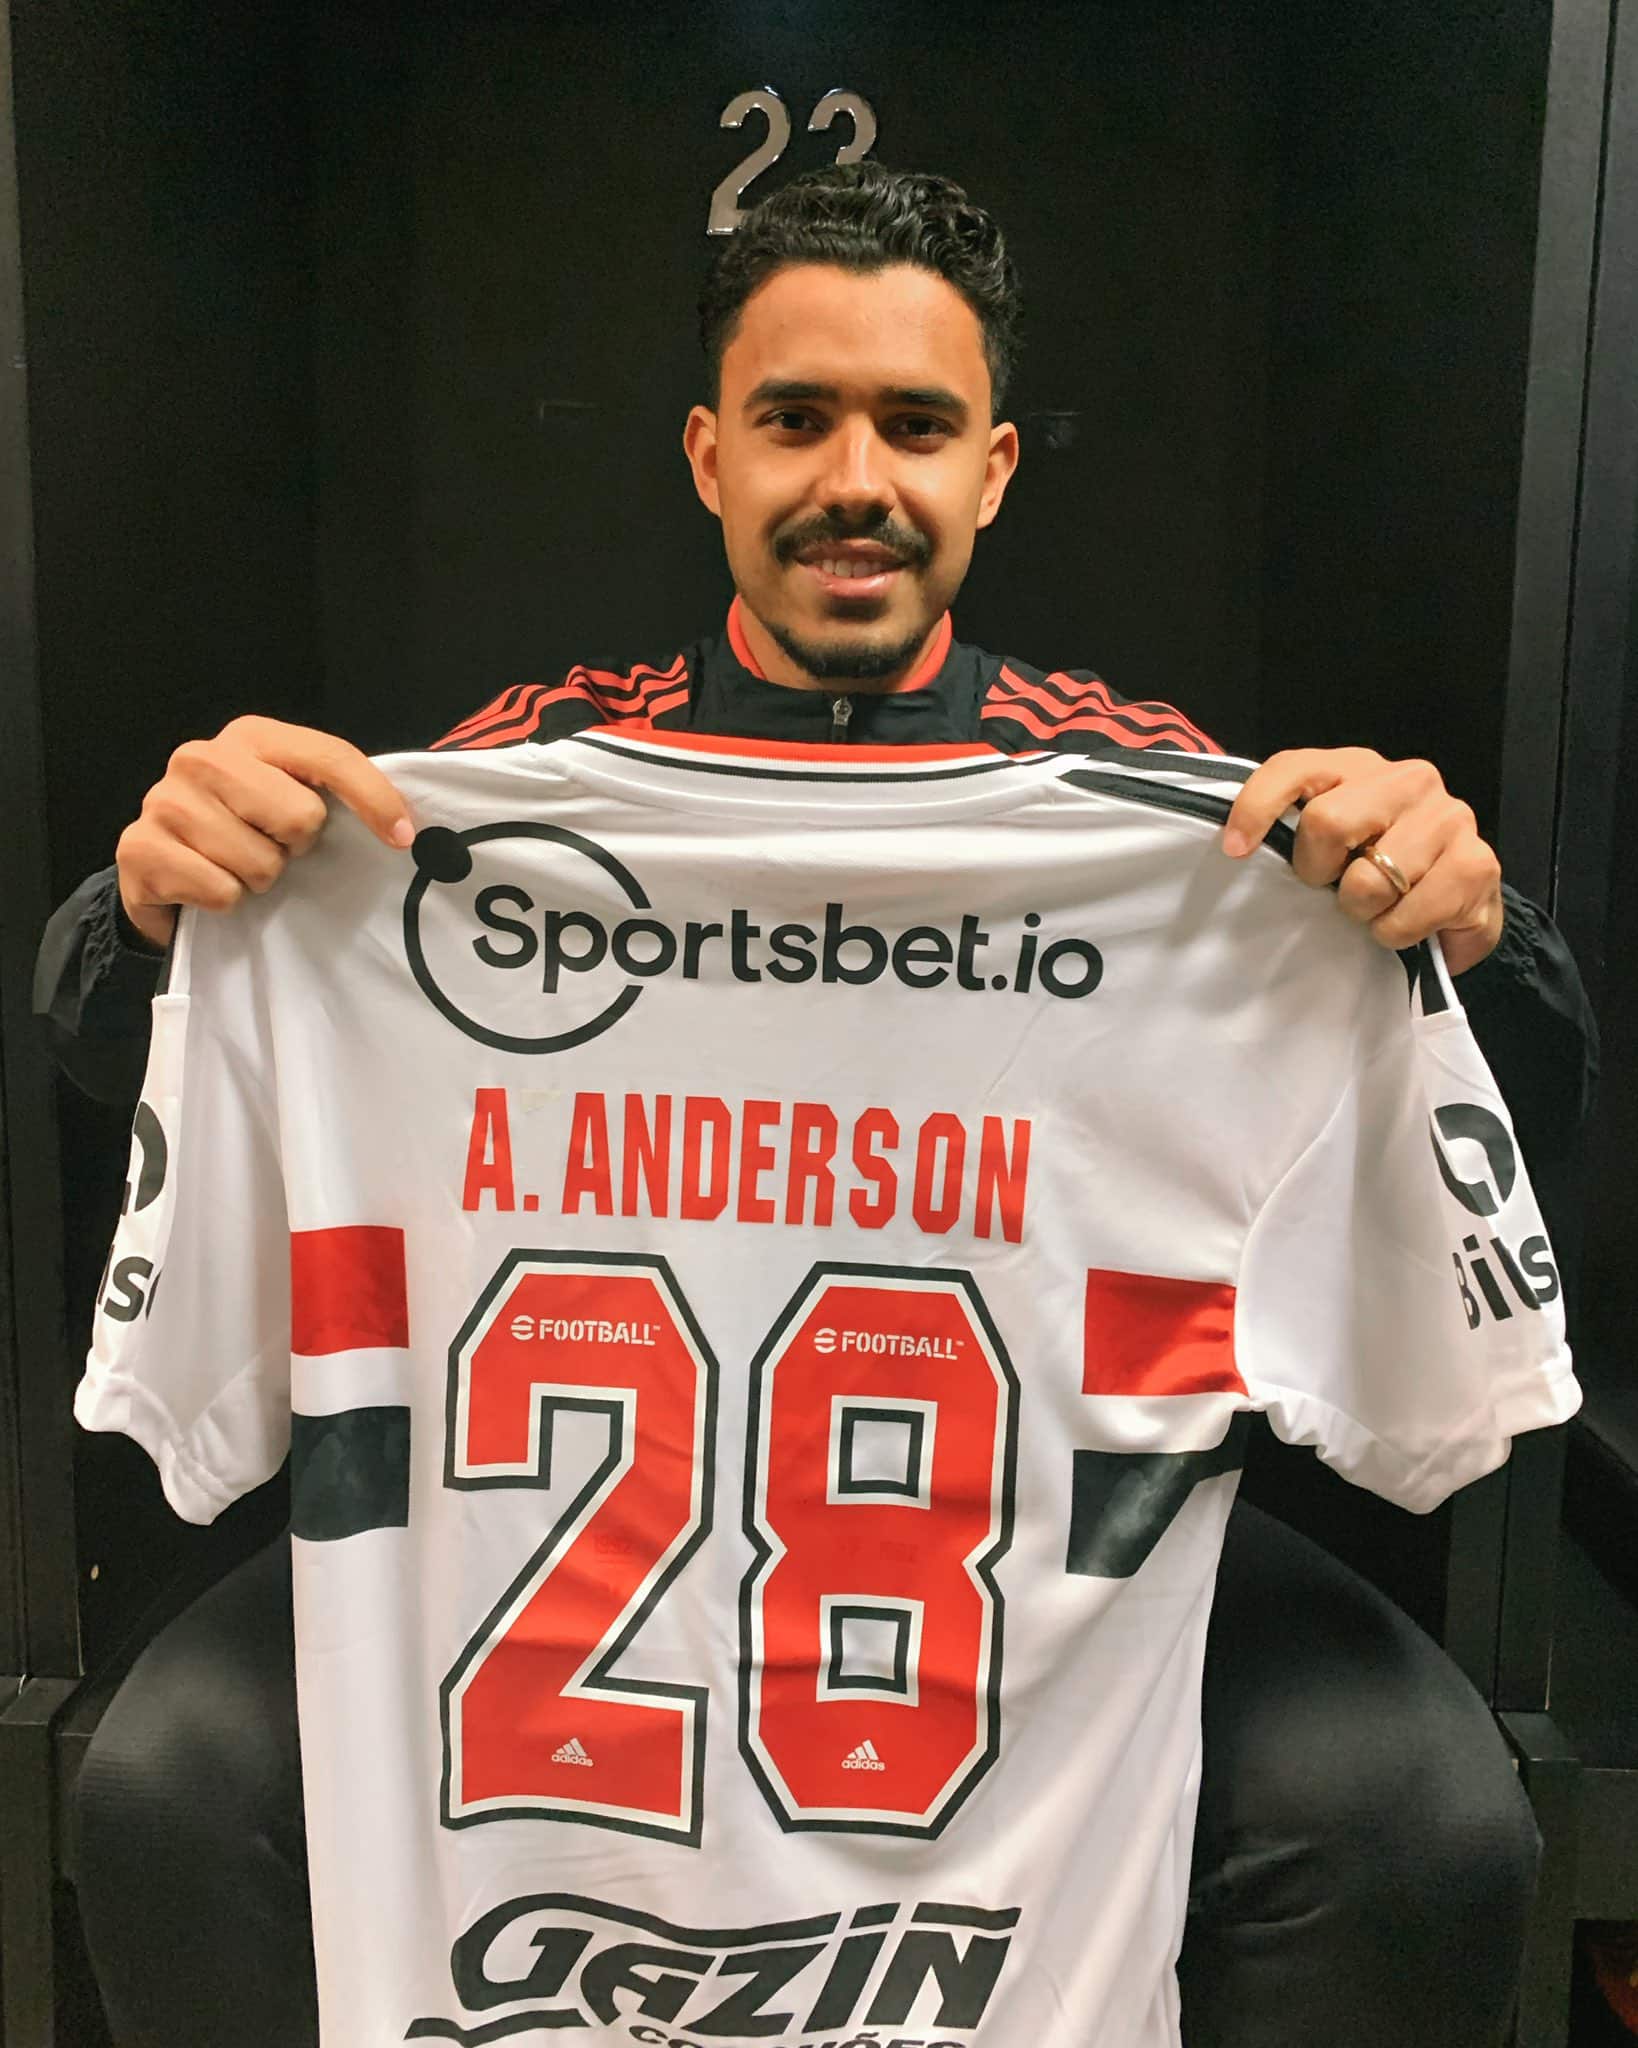 André Anderson usará a camisa 28 no São Paulo